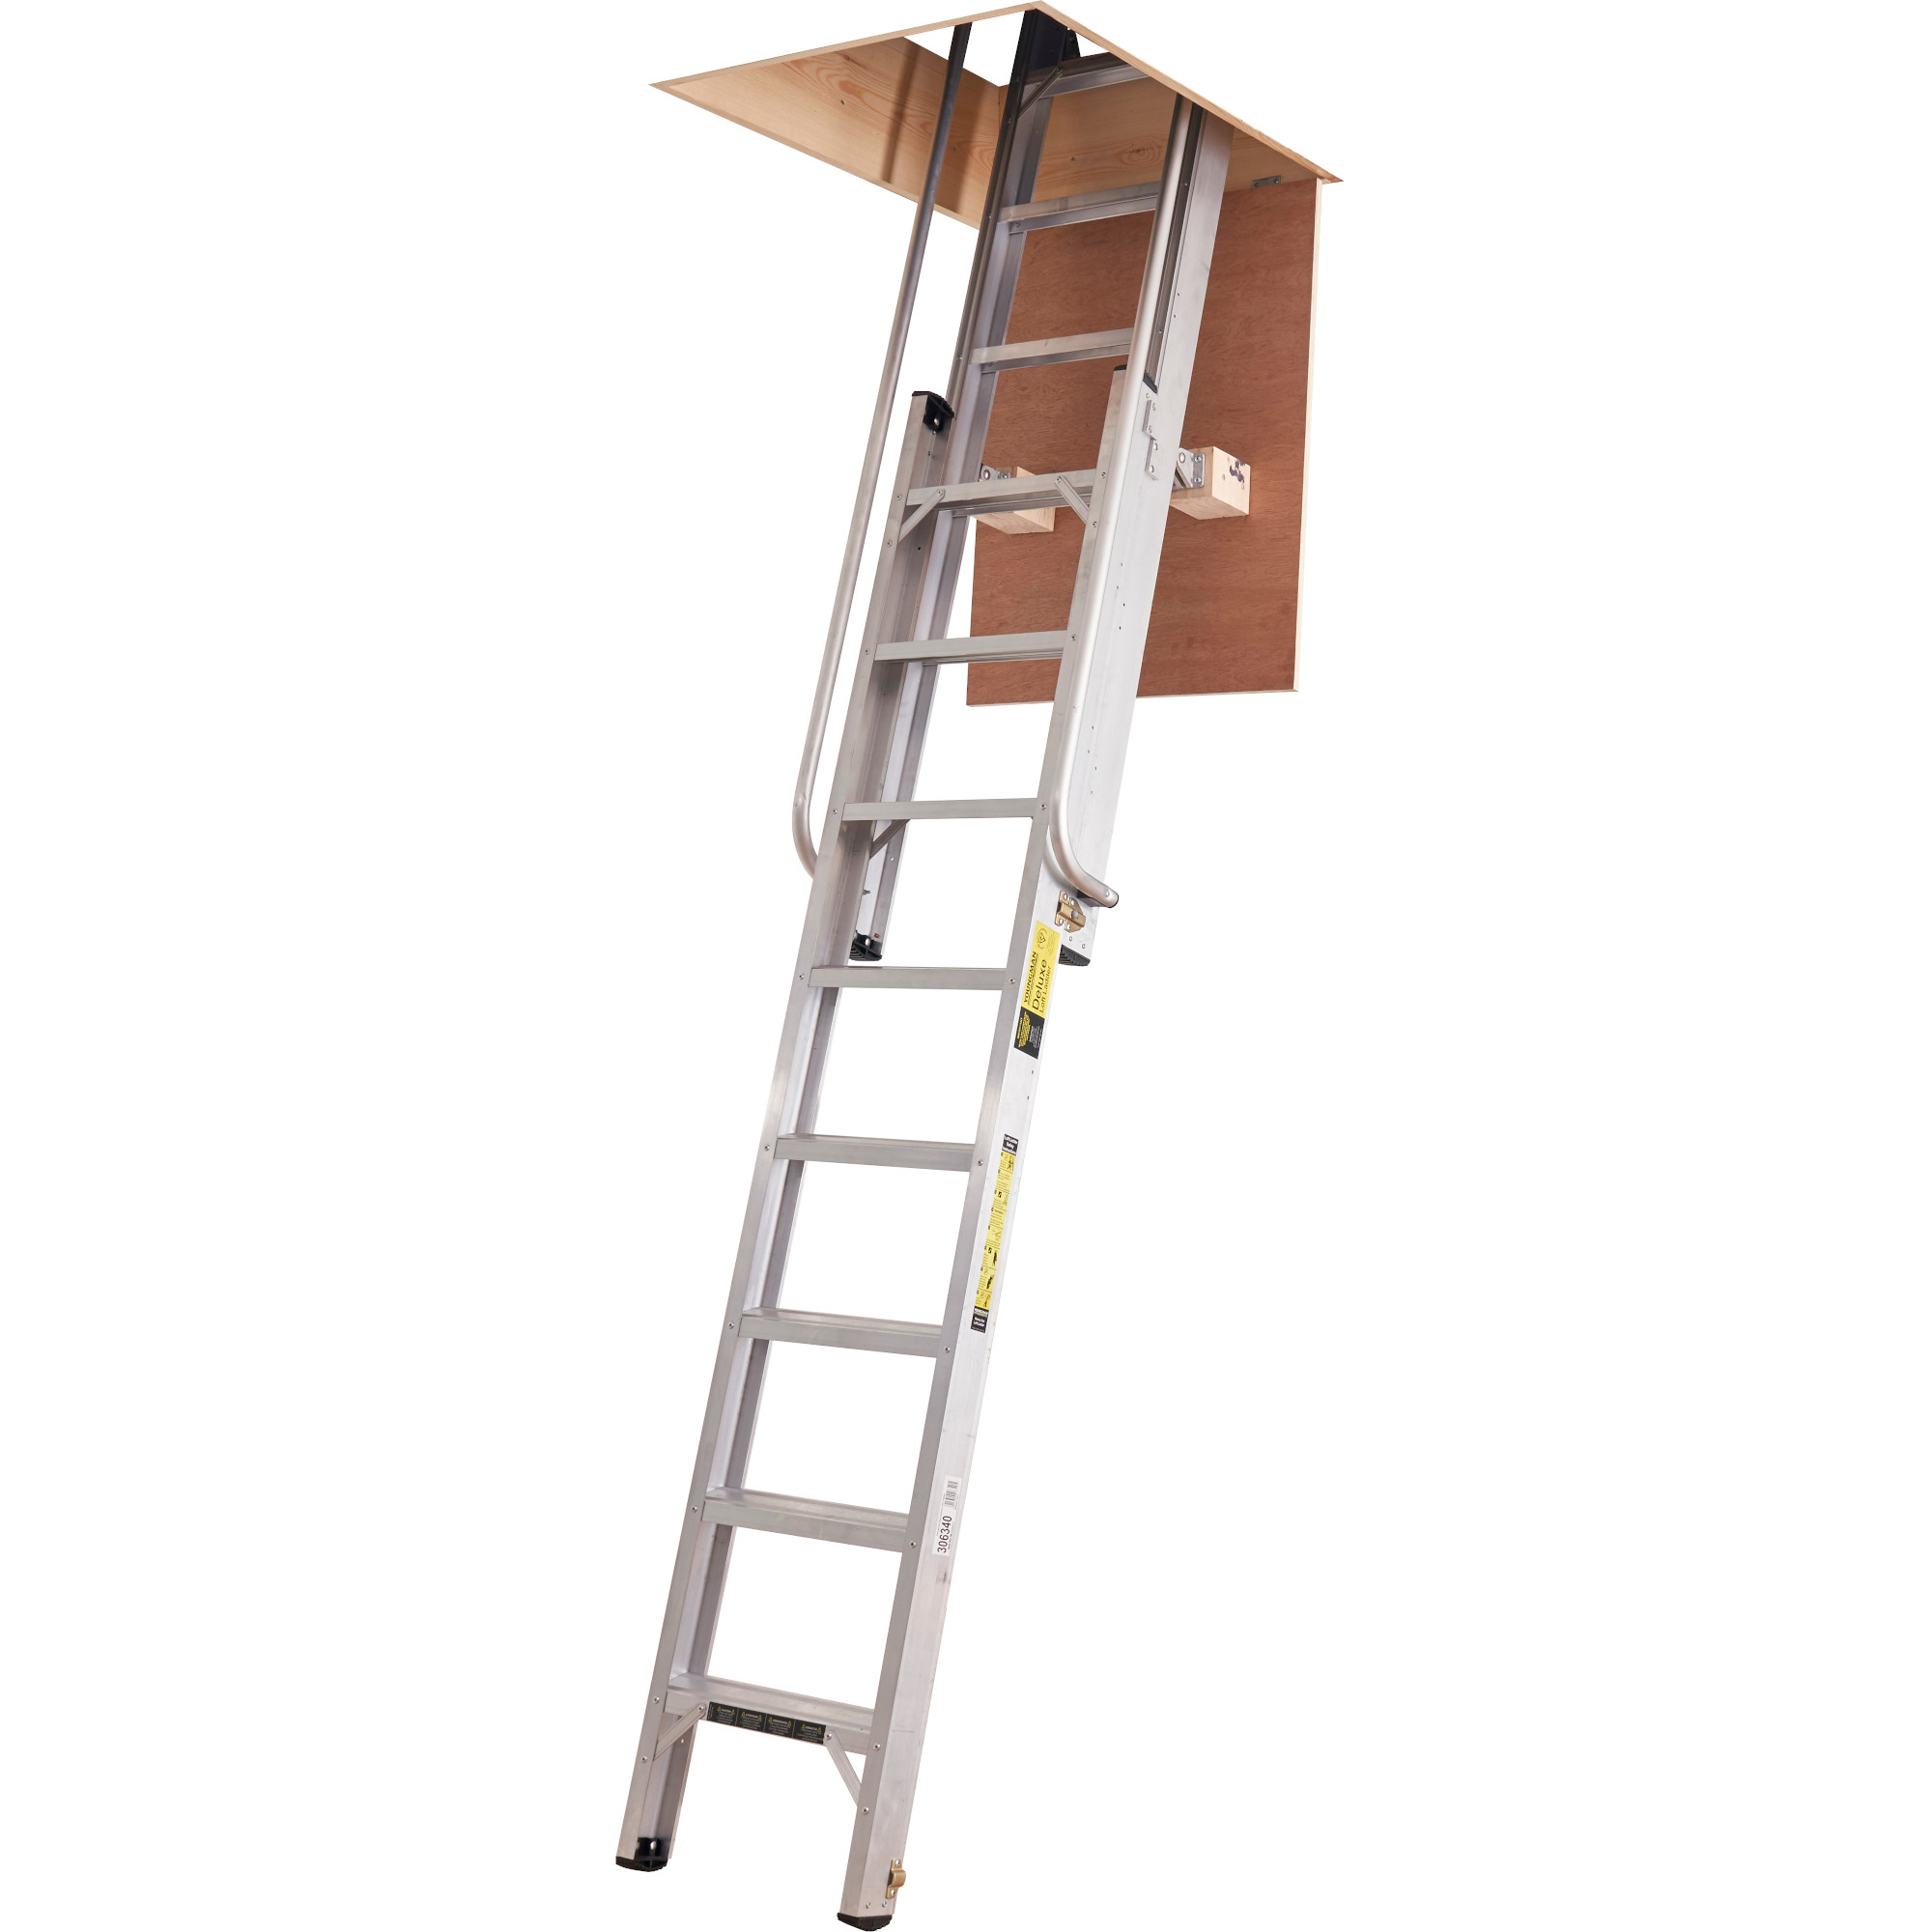 Youngman Deluxe Loft Ladder